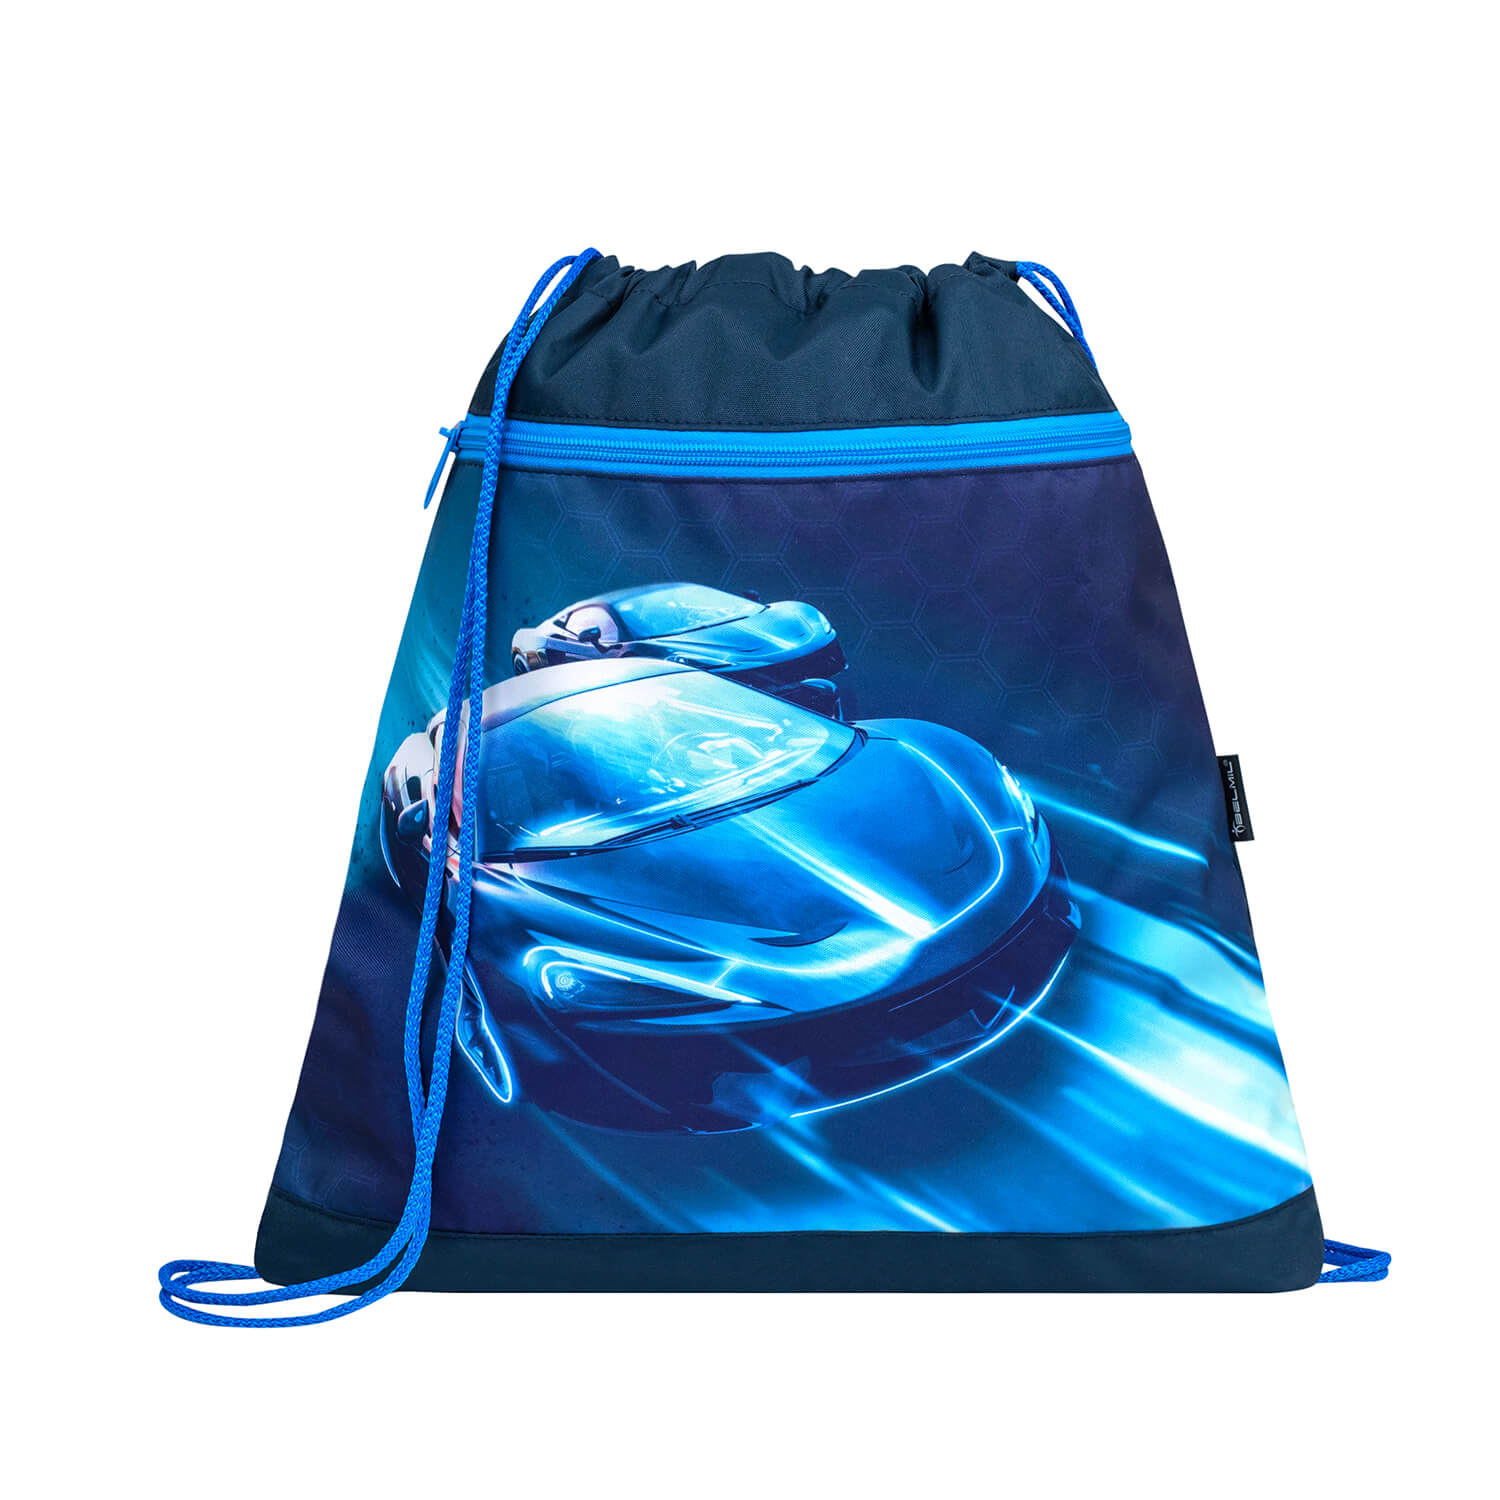 Classy Racing Blue Neon schoolbag set 4 pcs